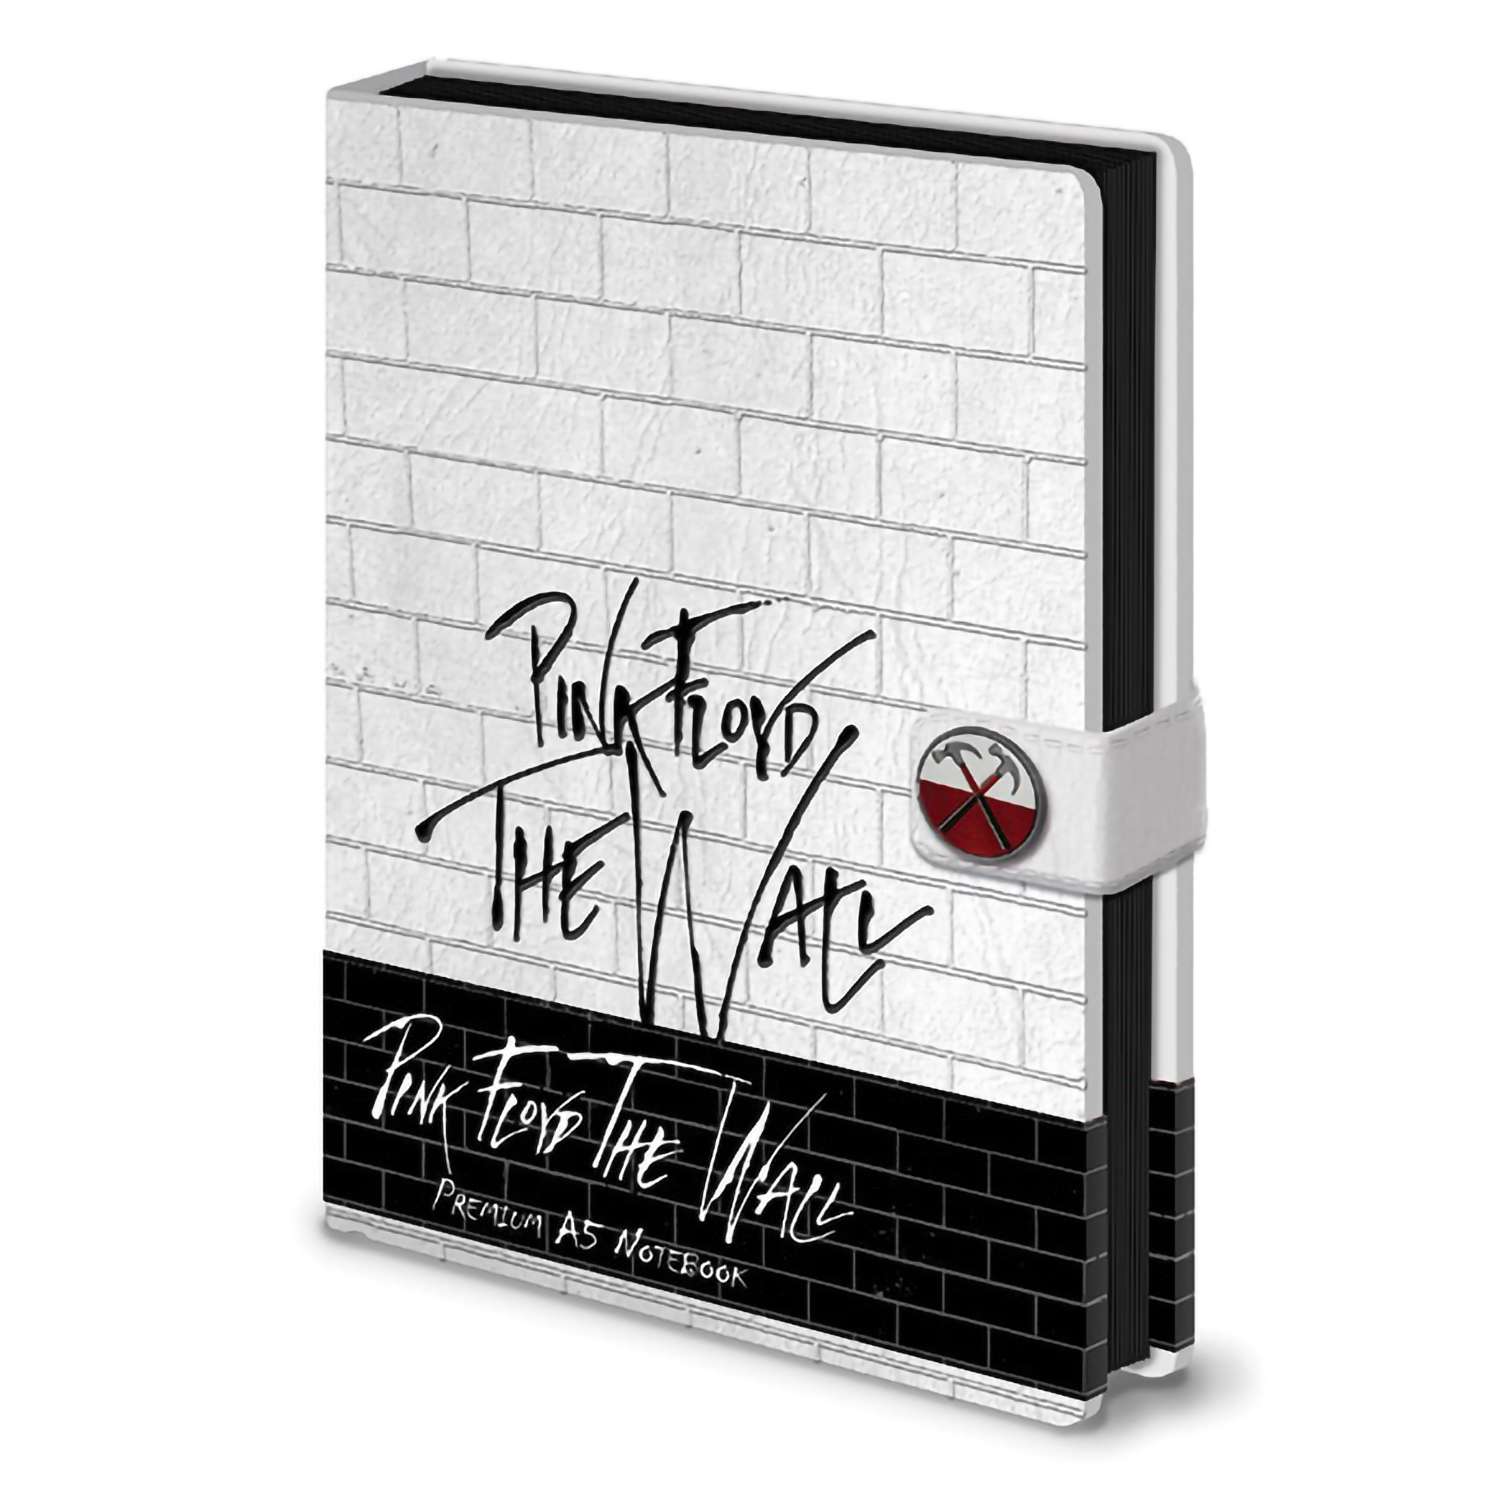 Записная книжка Pyramid Pink Floyd a5 Premium Notebook SR72283 - фото 1